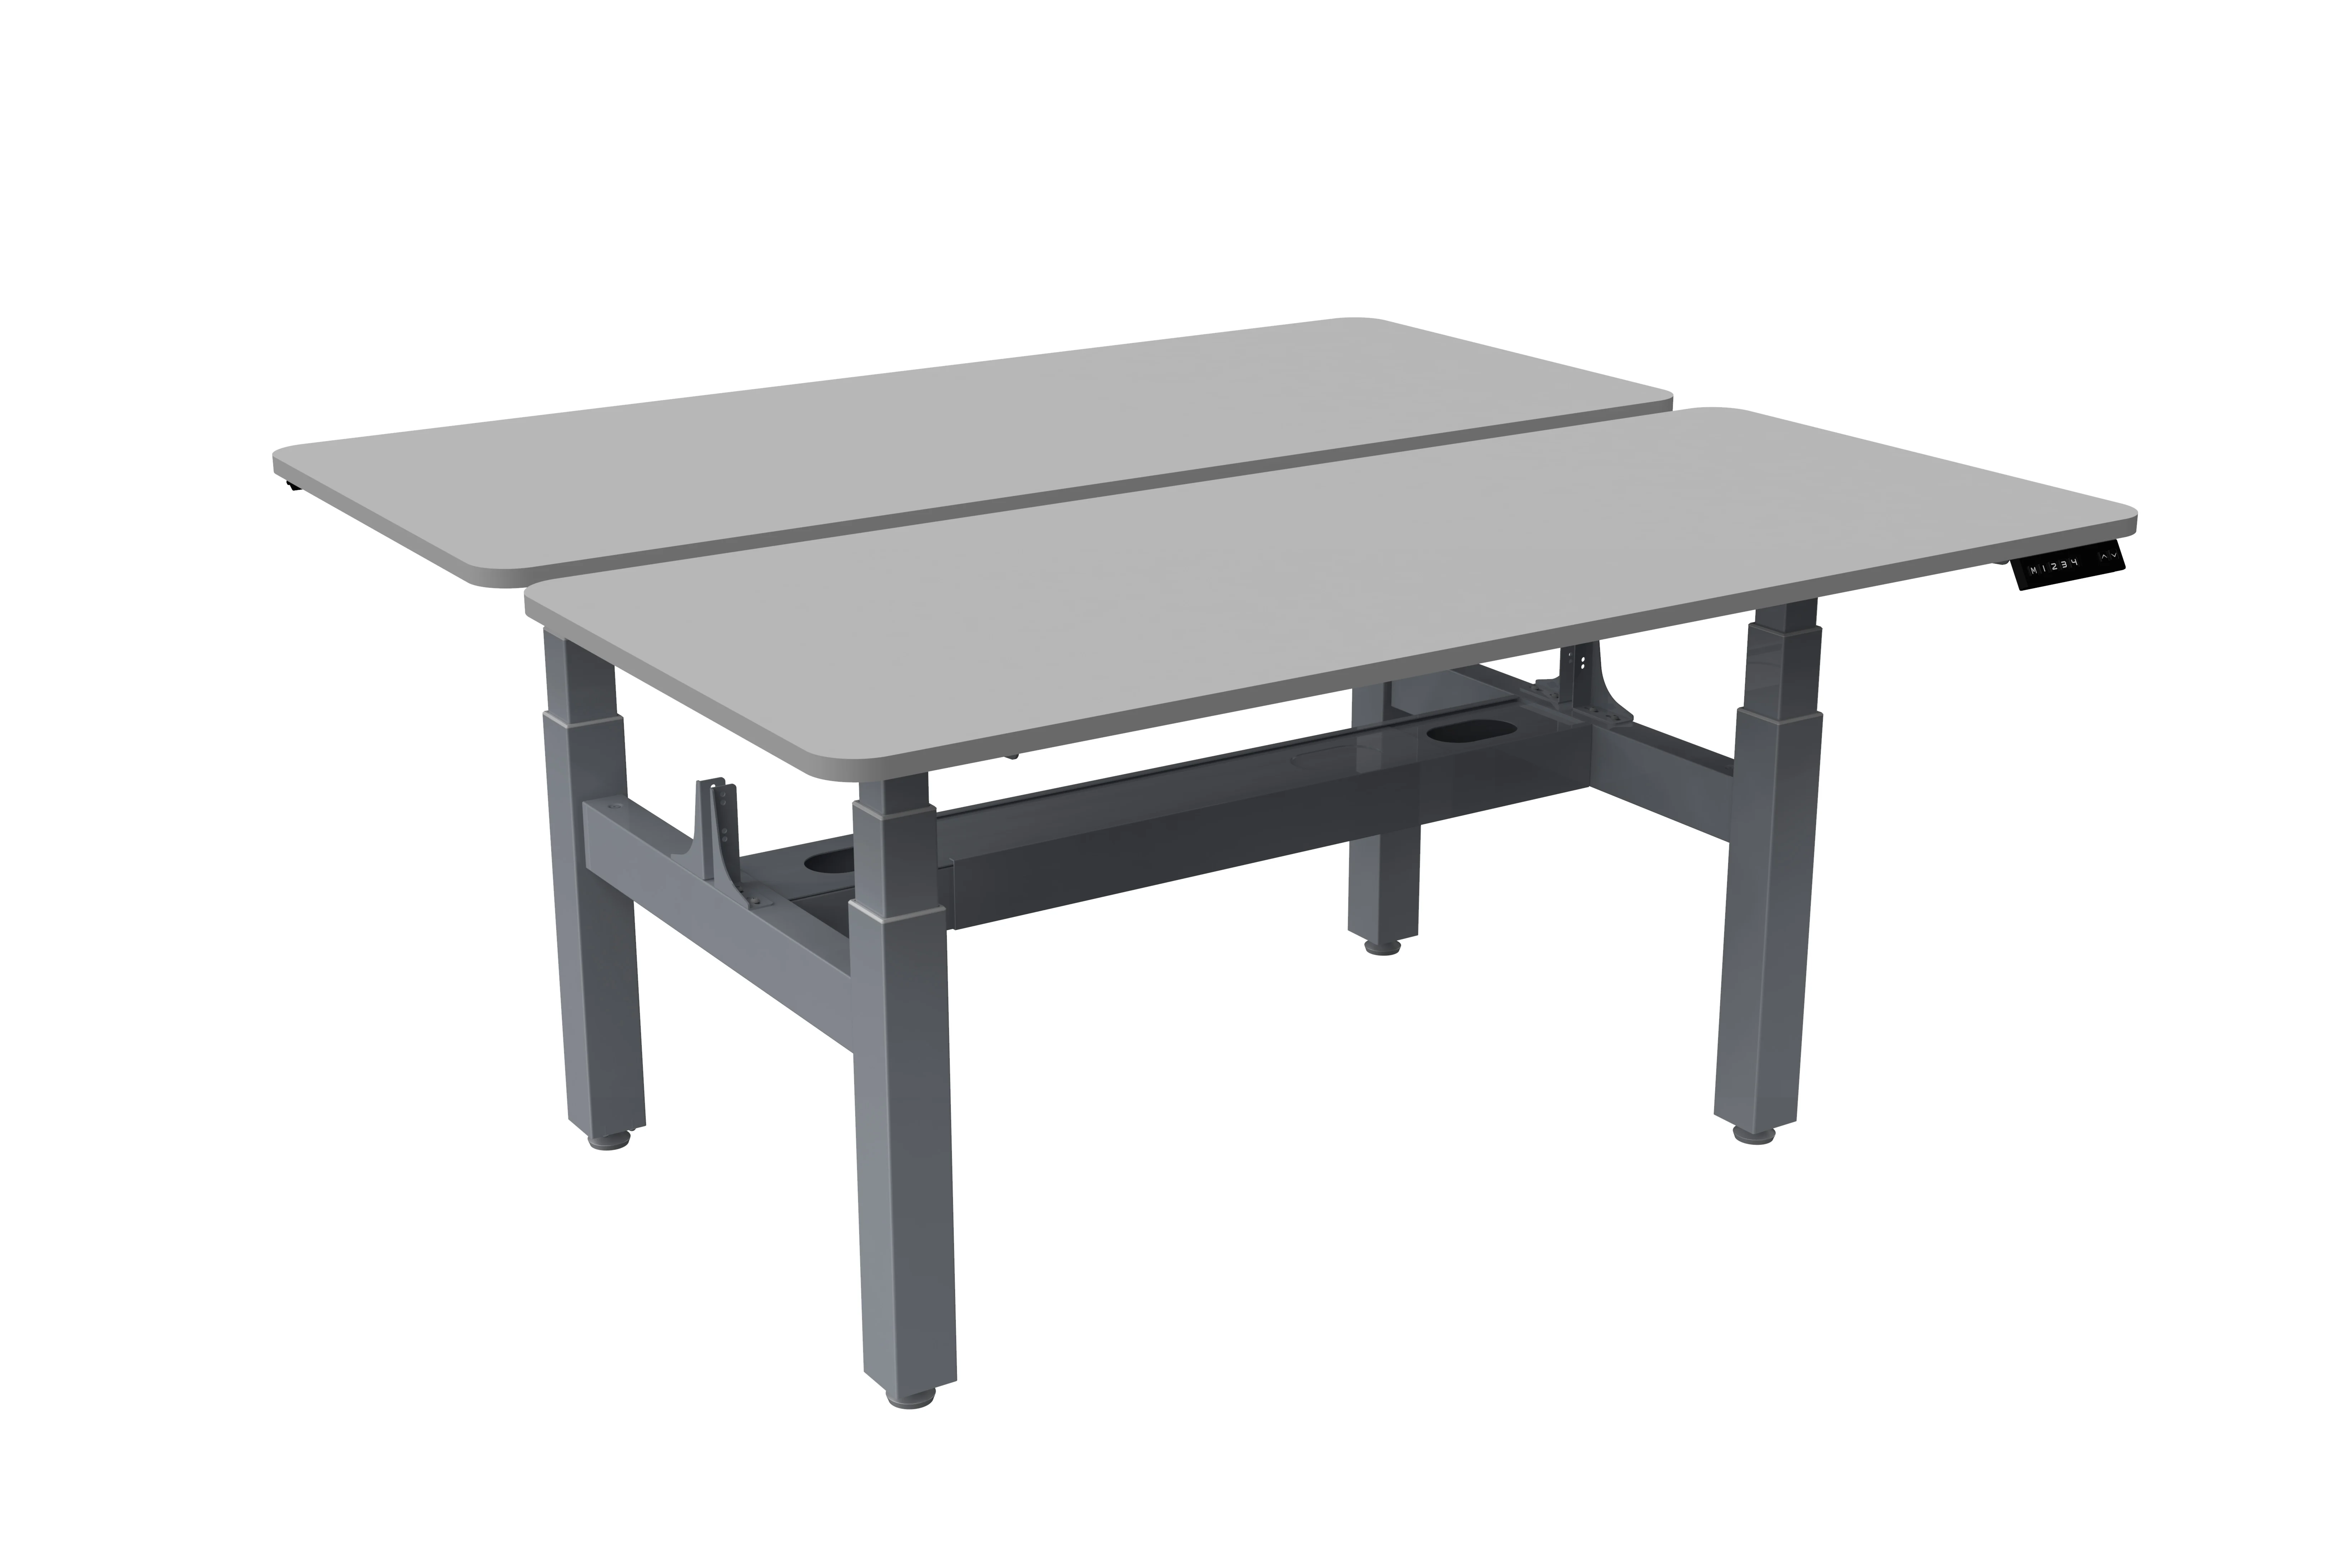 4 Legs Standing Electric Desk Adjustable Table Frame - Buy 4 Legs